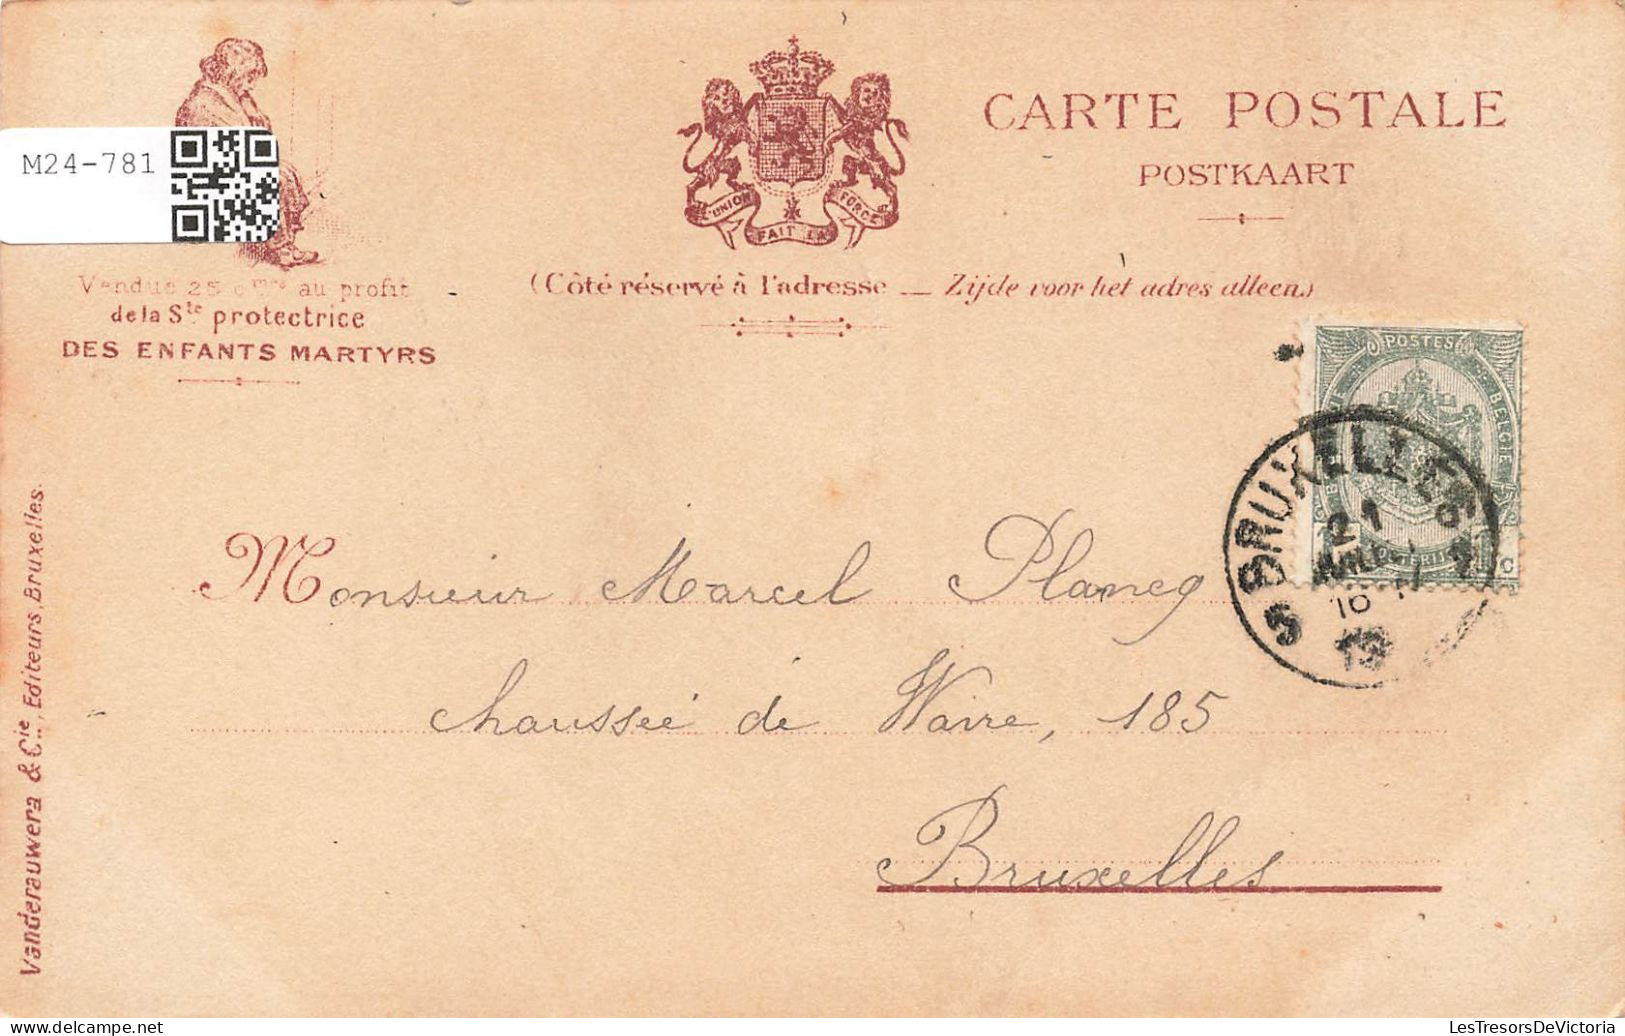 FAMILLES ROYALES - S.AR.Mgr Le Prince Léopold - Carte Postale Ancienne - Familles Royales